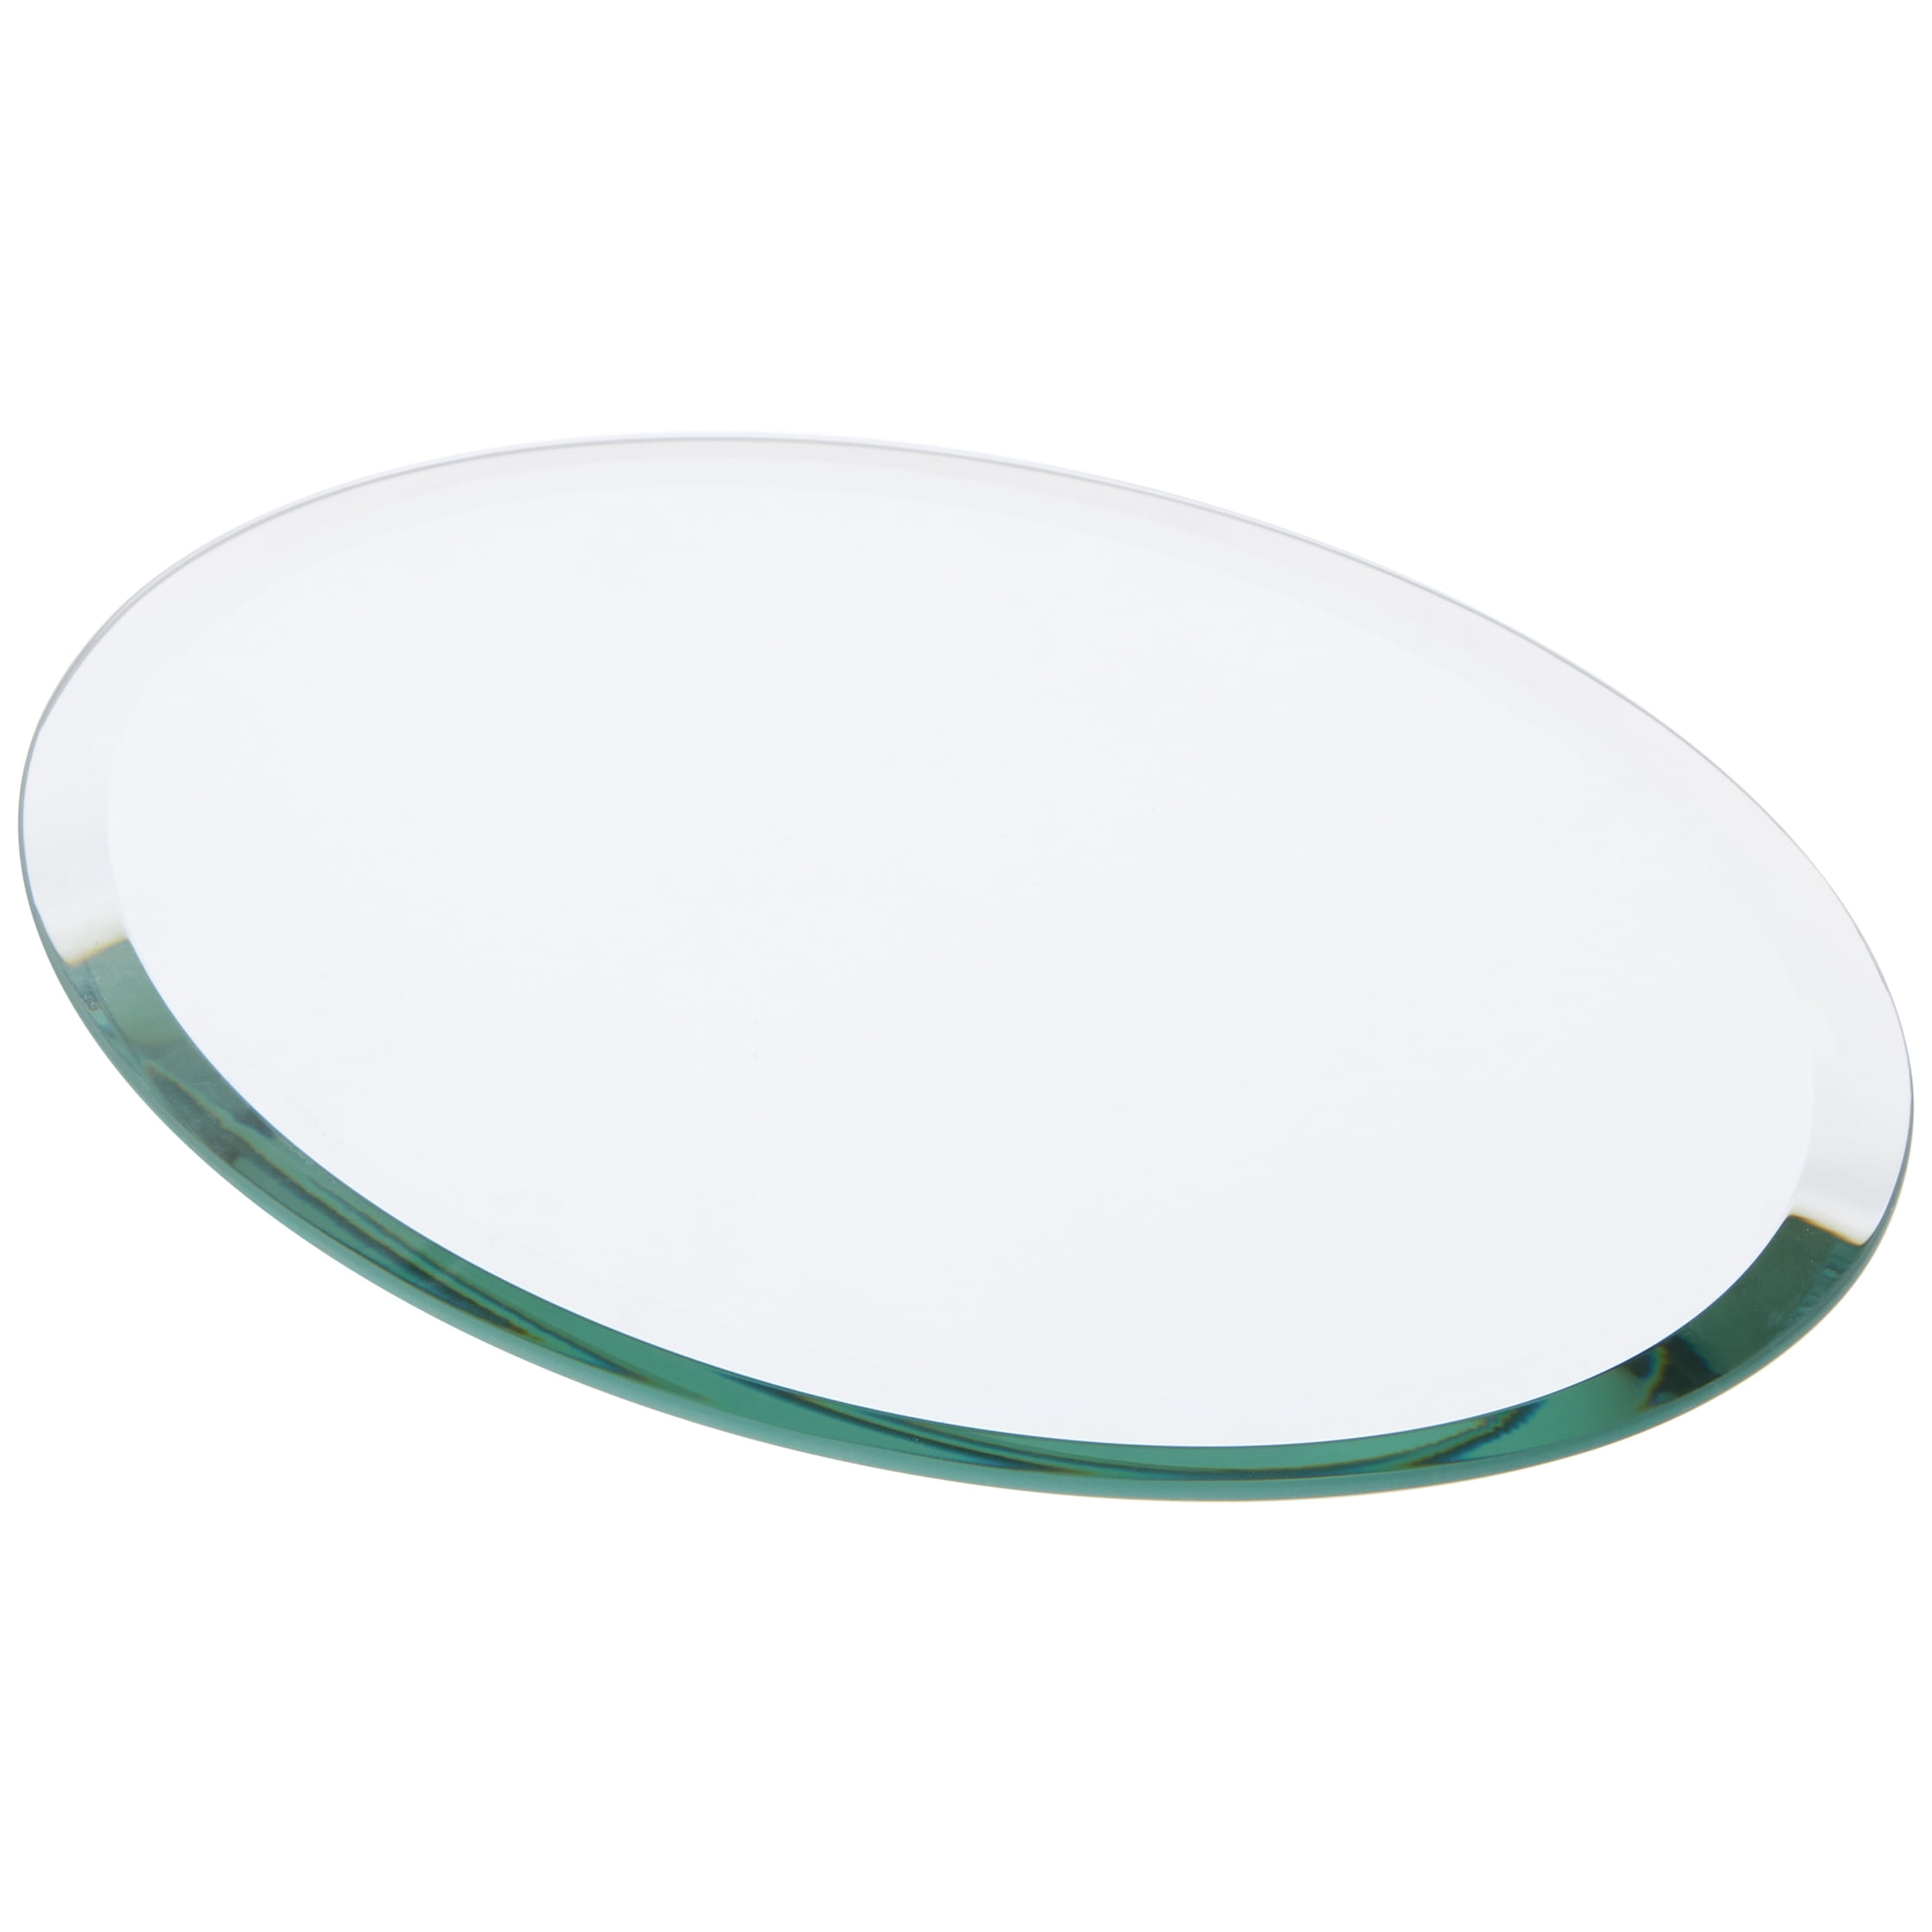 7 inch x 9 inch Plymor Oval 5mm Beveled Glass Mirror 